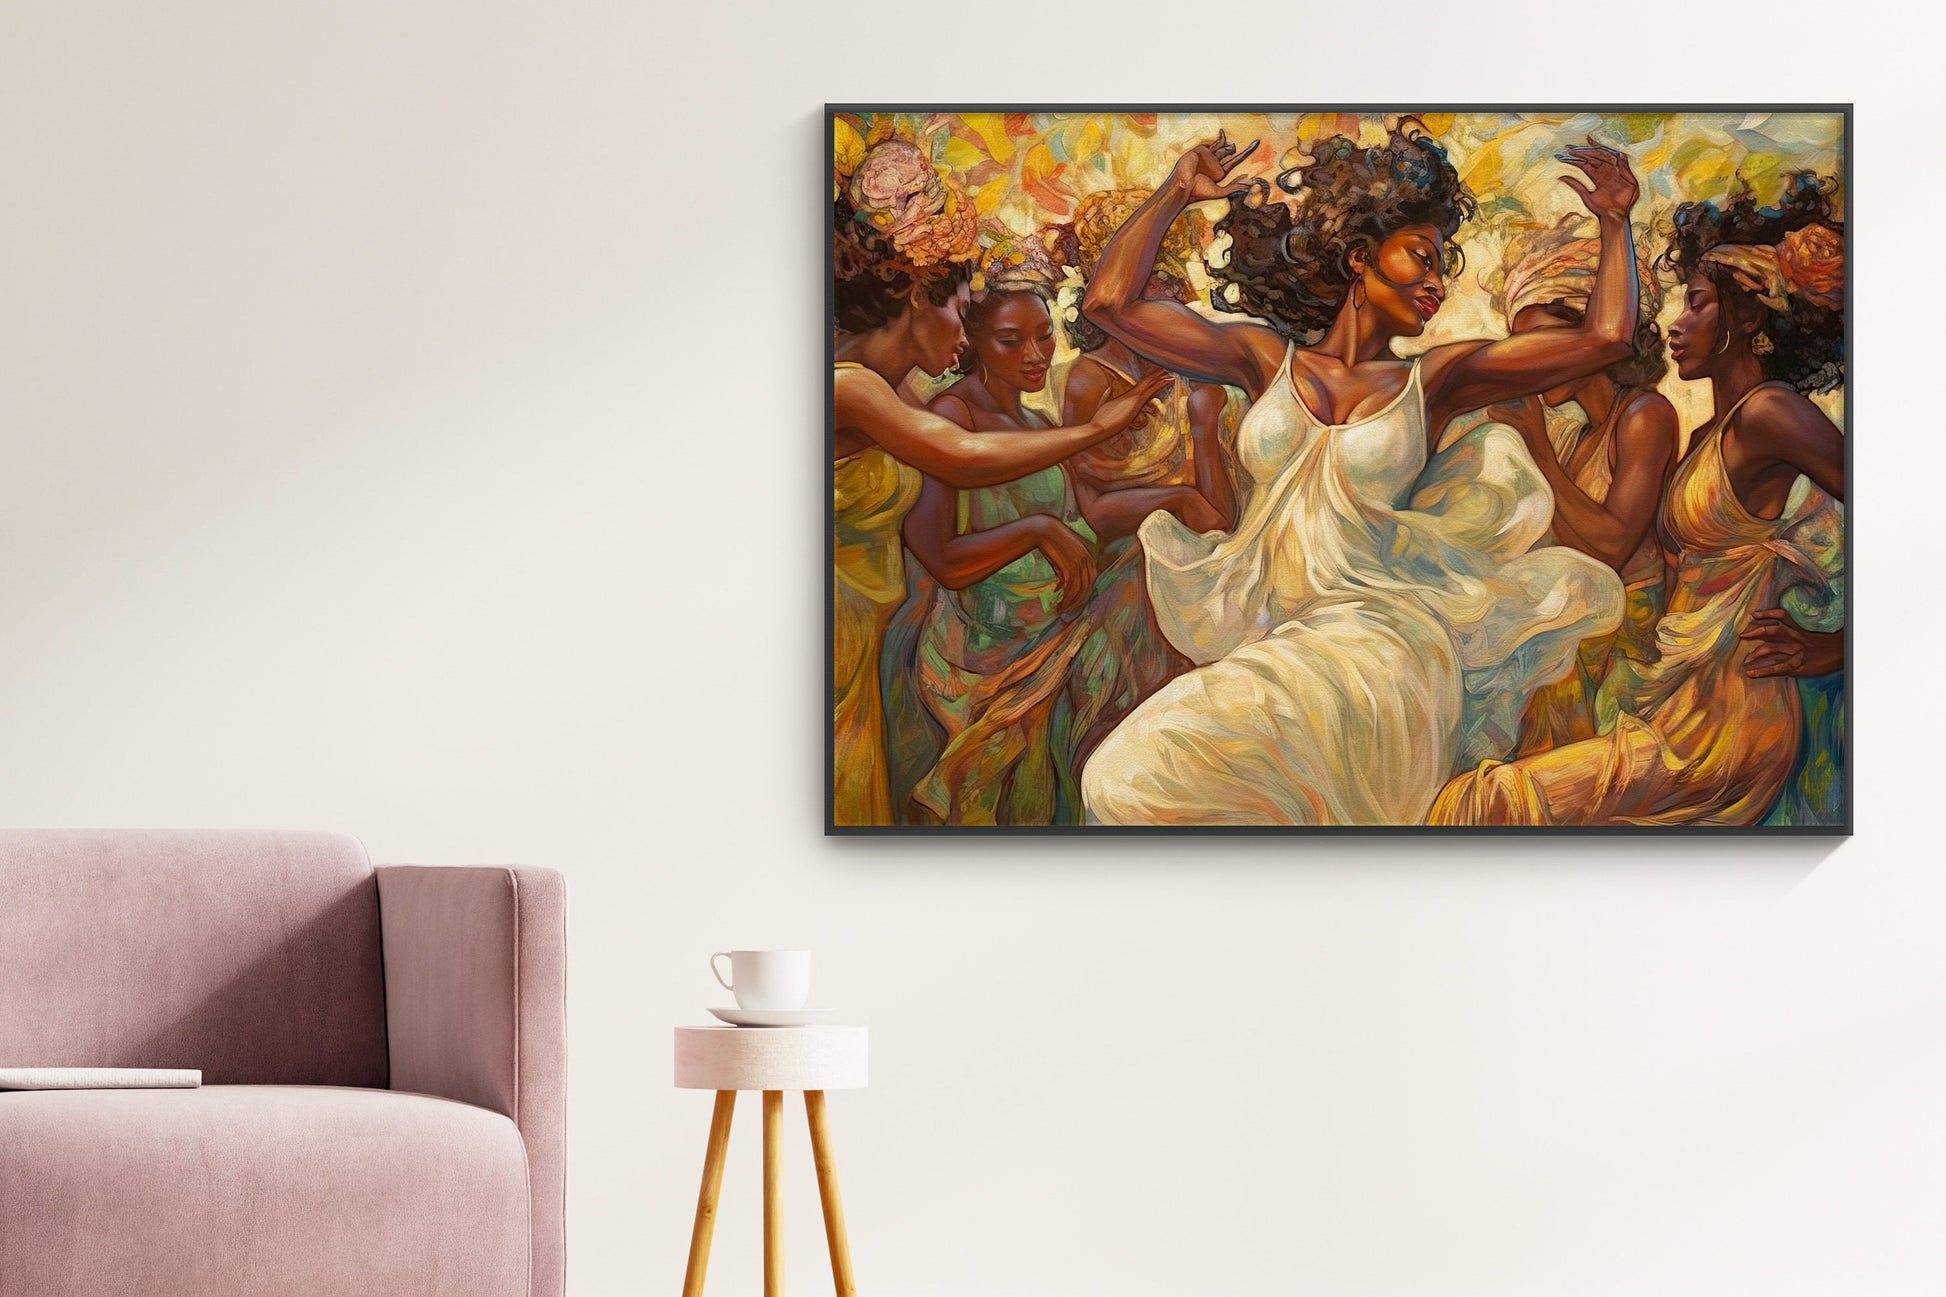 Digital Illustration Package - X5 Dancing in Color - Celebrating Black and African Women - 8736 x 4896 @300DPI